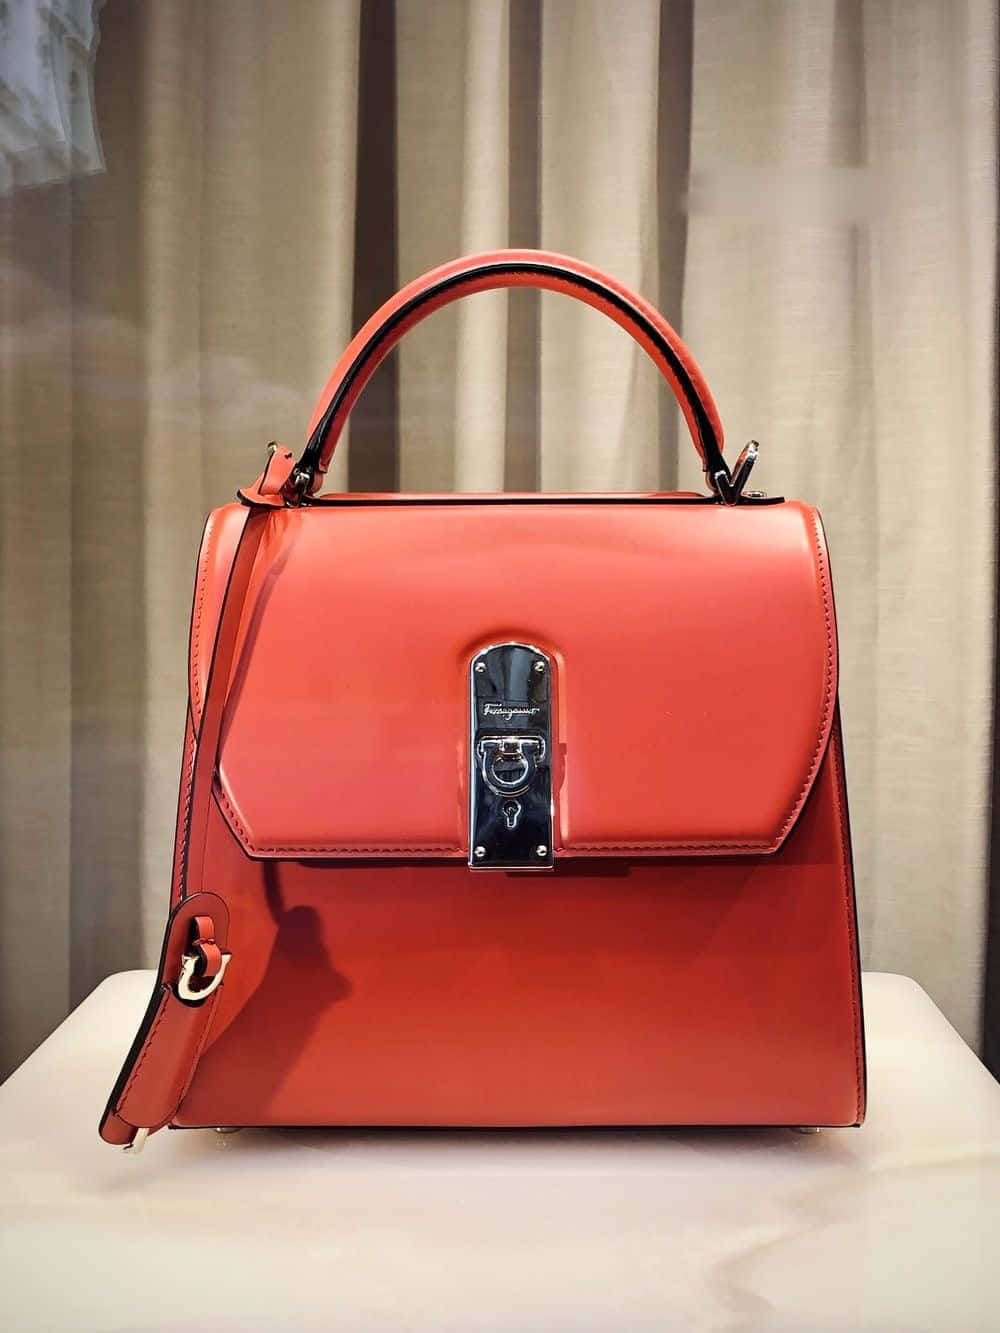 A Red Handbag On Display In A Window